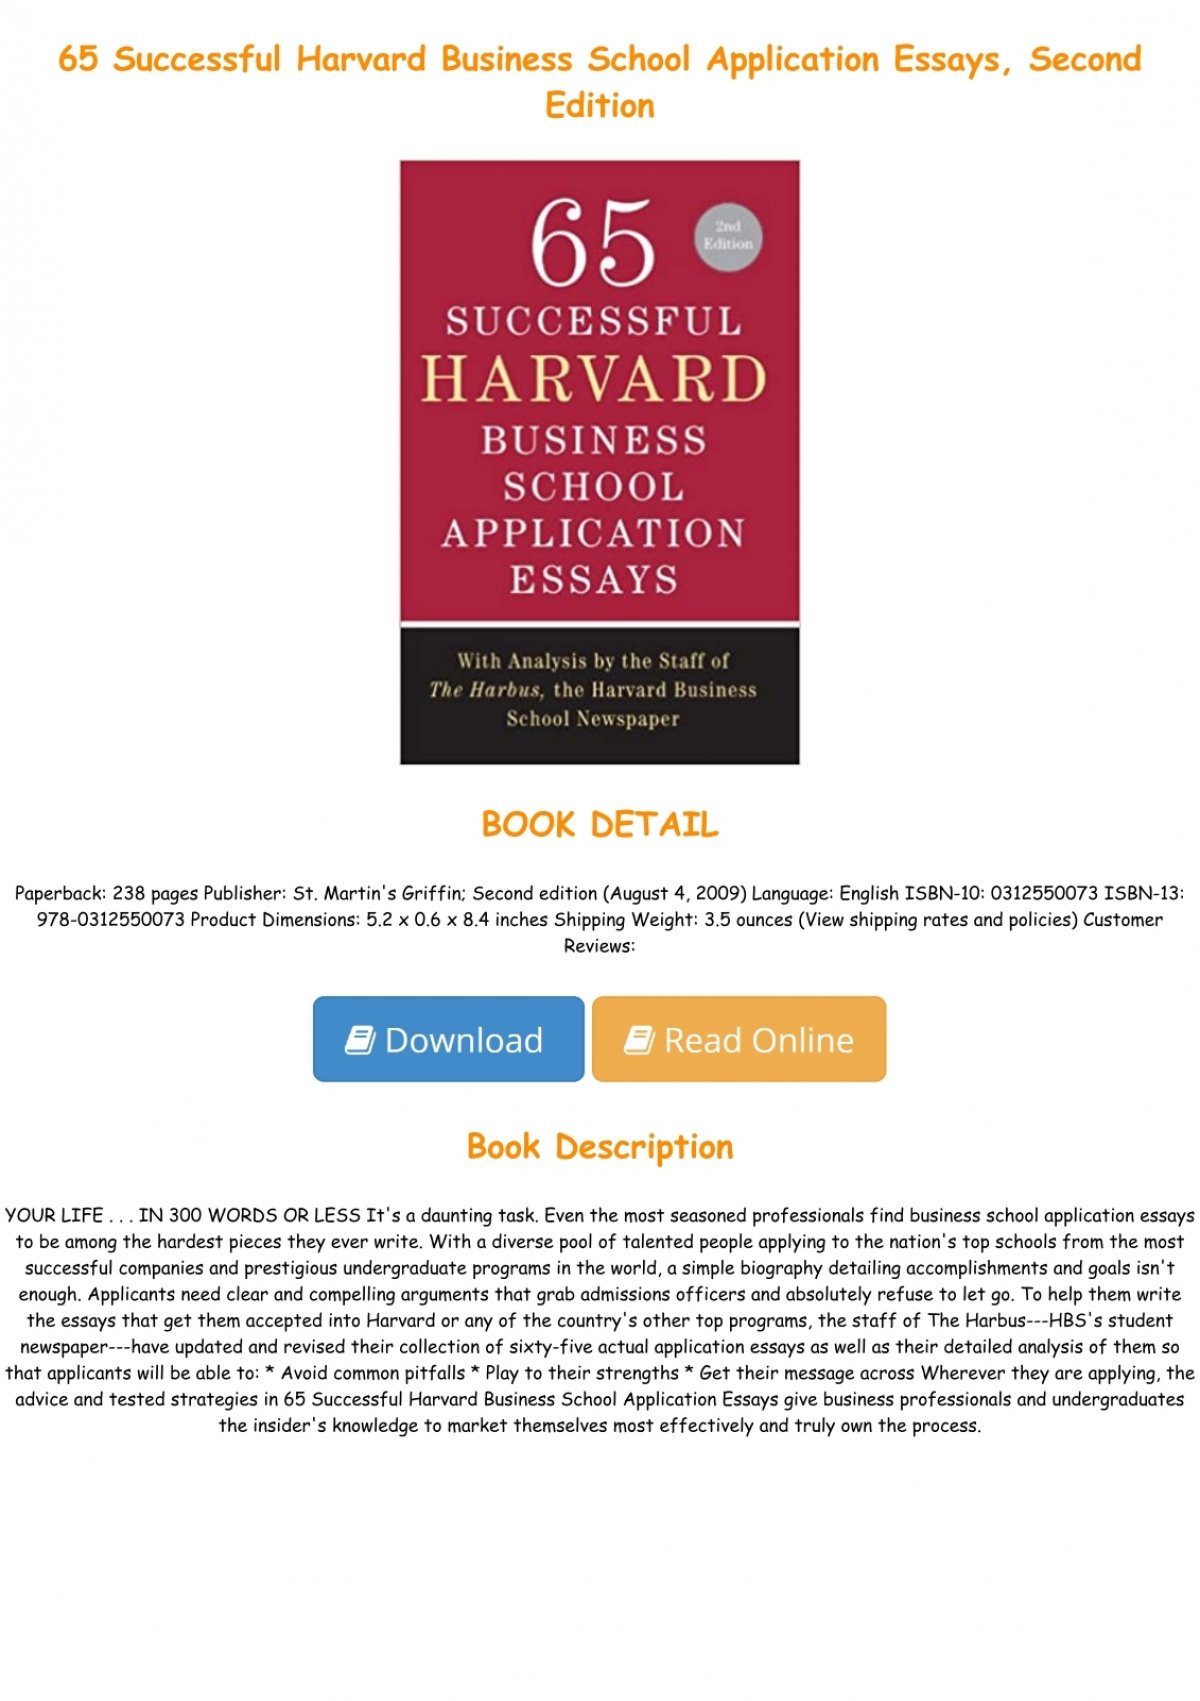 65 successful harvard business school application essays second edition